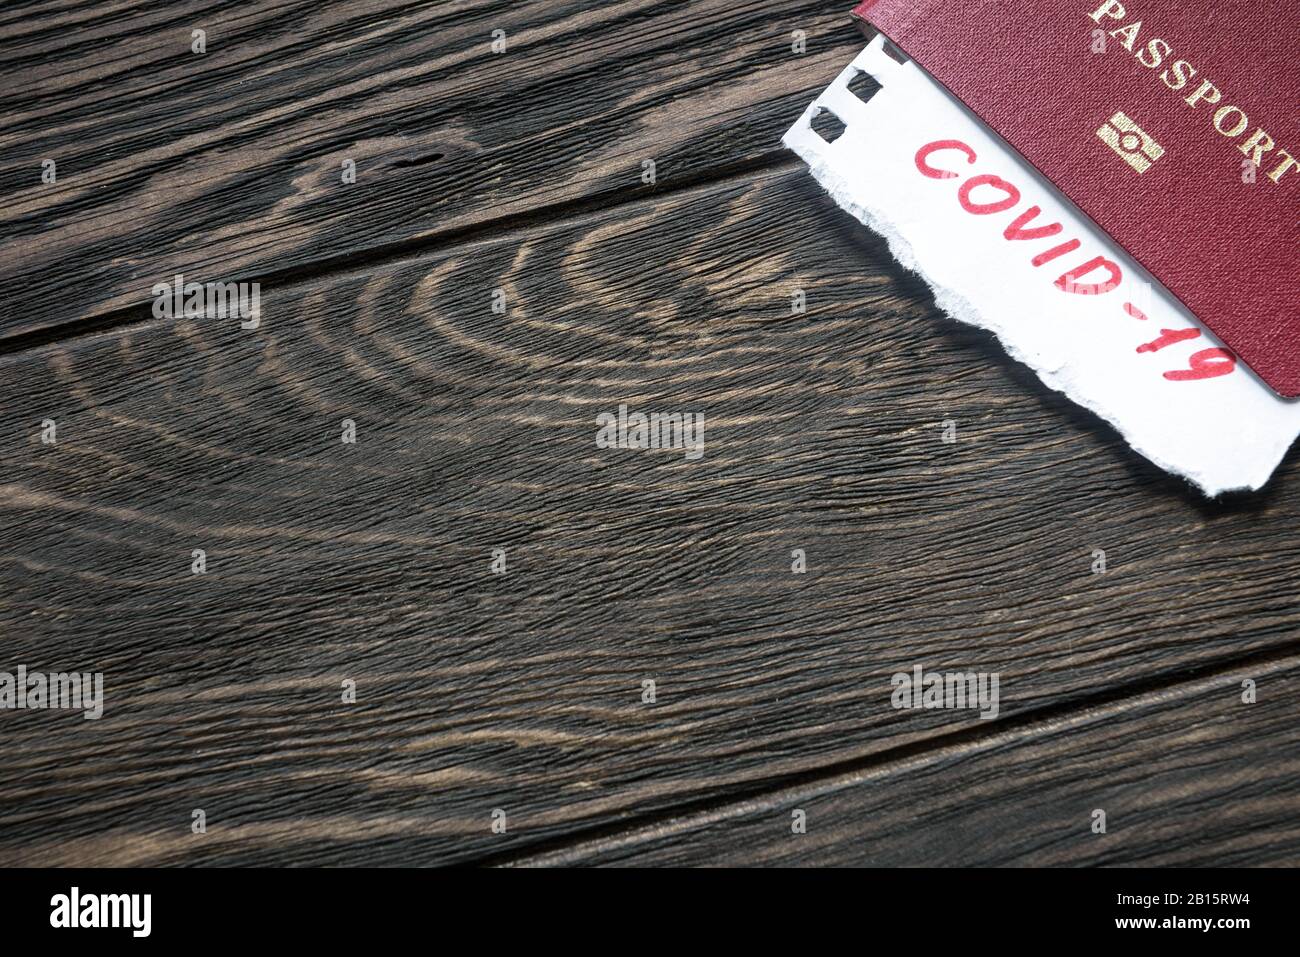 Coronavirus concept background. Passport and note COVID-19 coronavirus on dark wooden table. Novel corona virus outbreak, epidemic in China. Border co Stock Photo